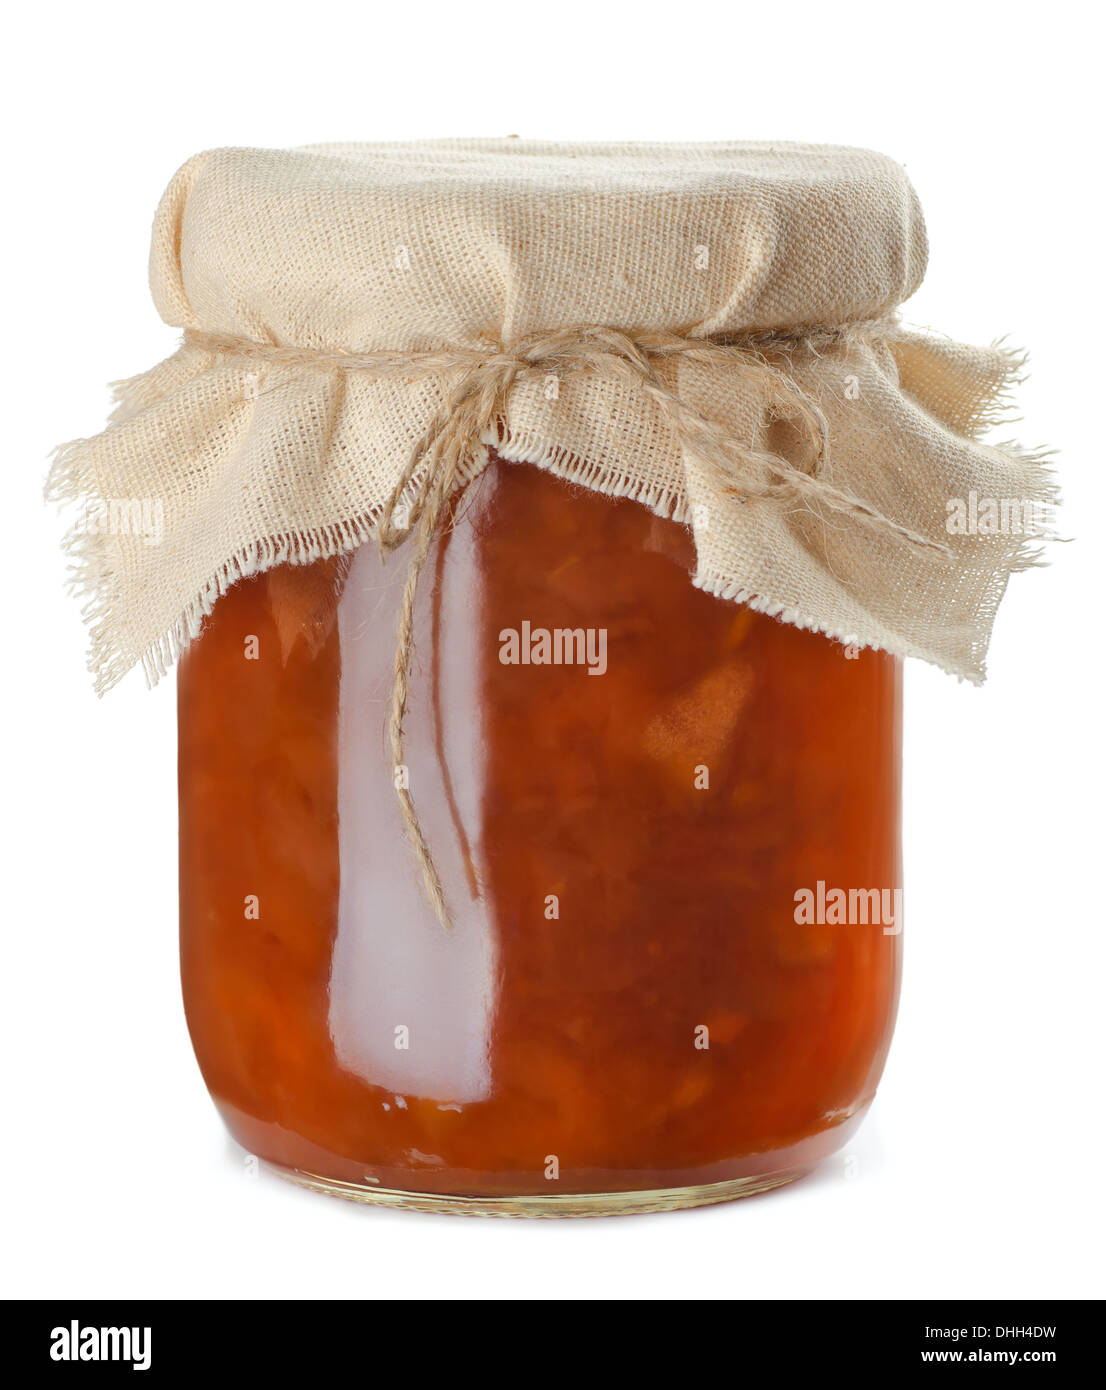 Tarro de mermelada casera de manzana aislado en blanco Foto de stock